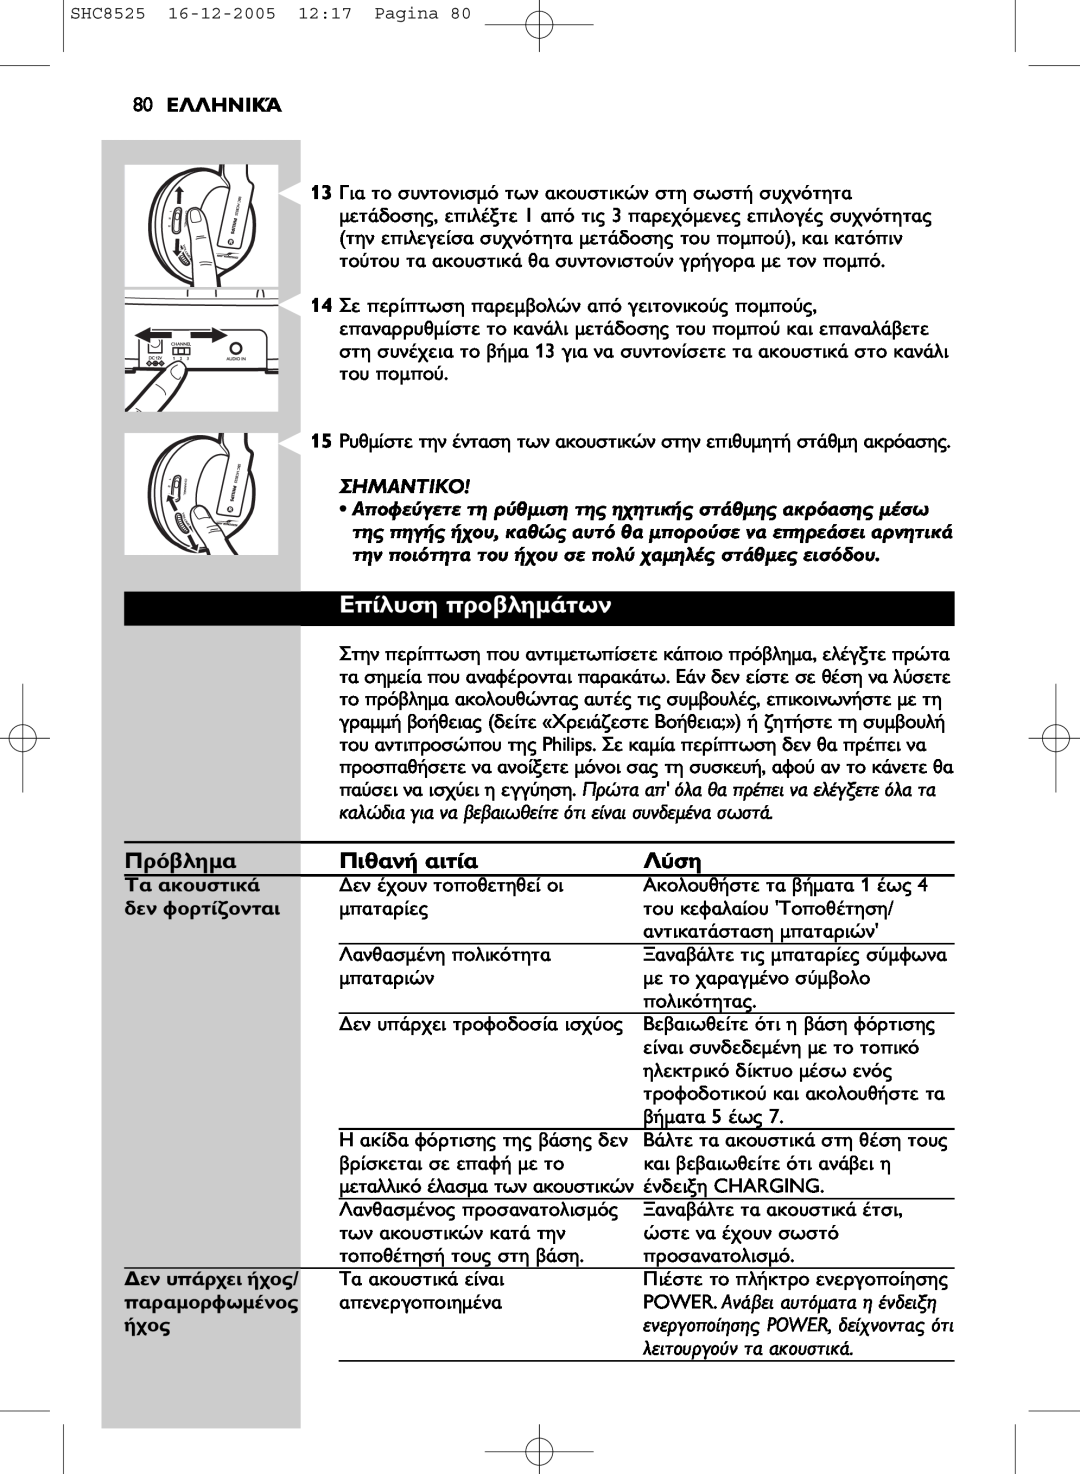 Event electronic manual POWER, d, SHC8525 16-12-200512:17 Pagina 